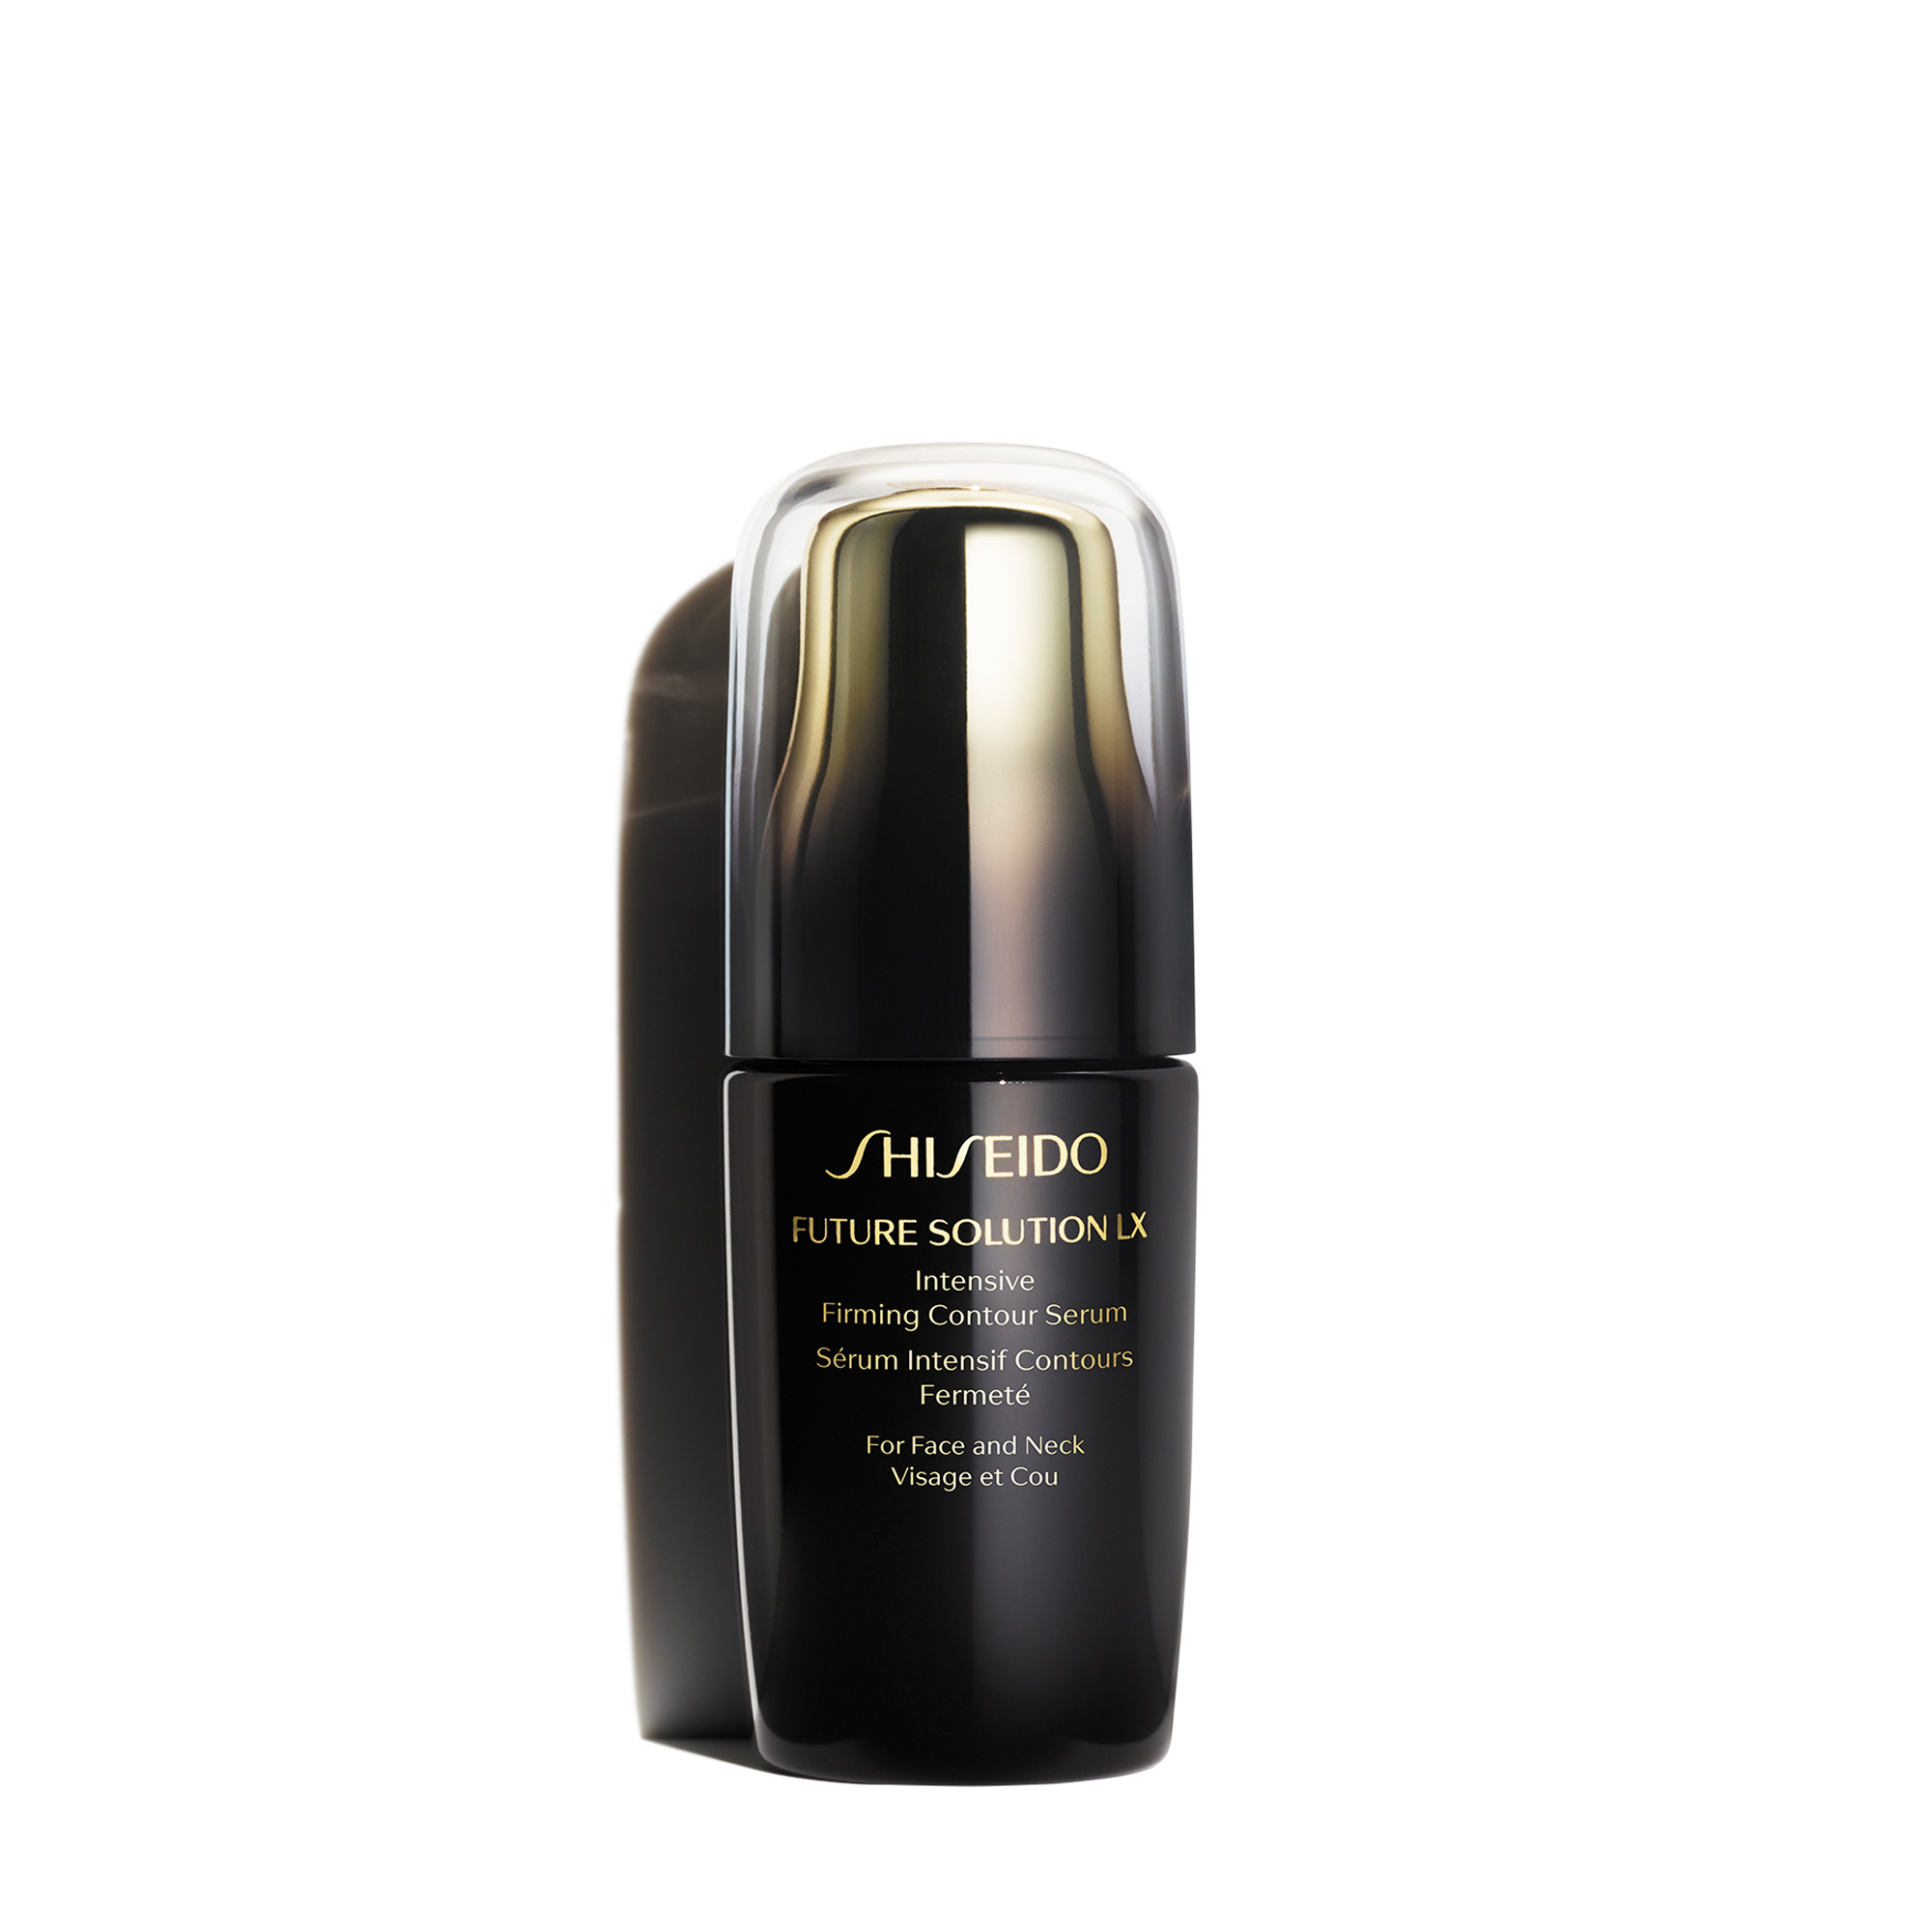 Shiseido Future Solution LX Intensive Firming Contour Serum - 50mL